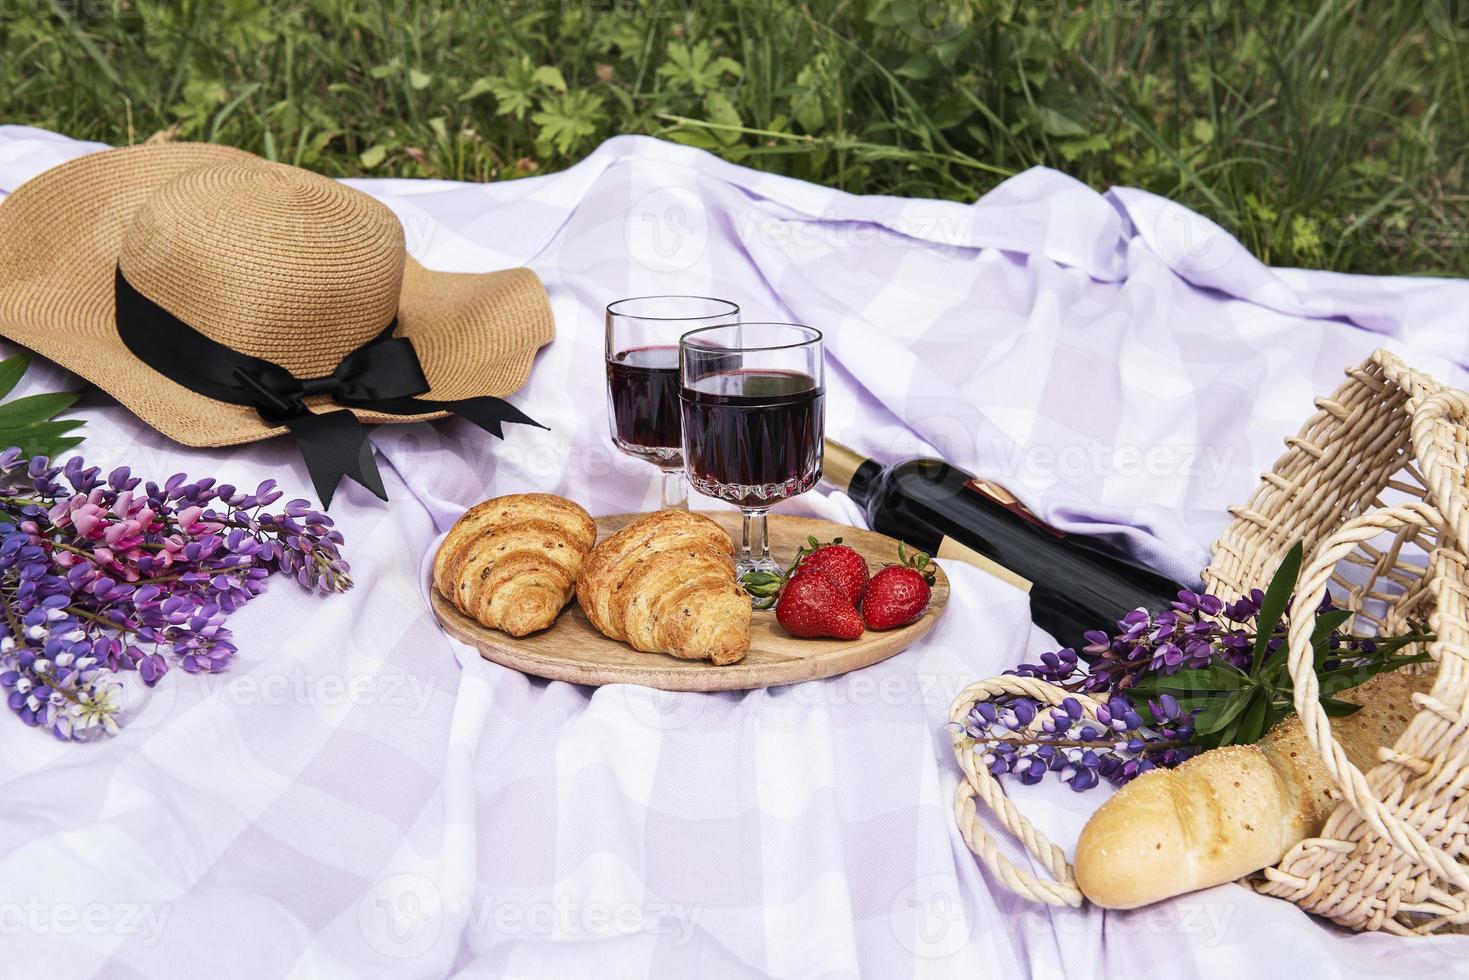 romantische Picknickszene am Sommertag foto